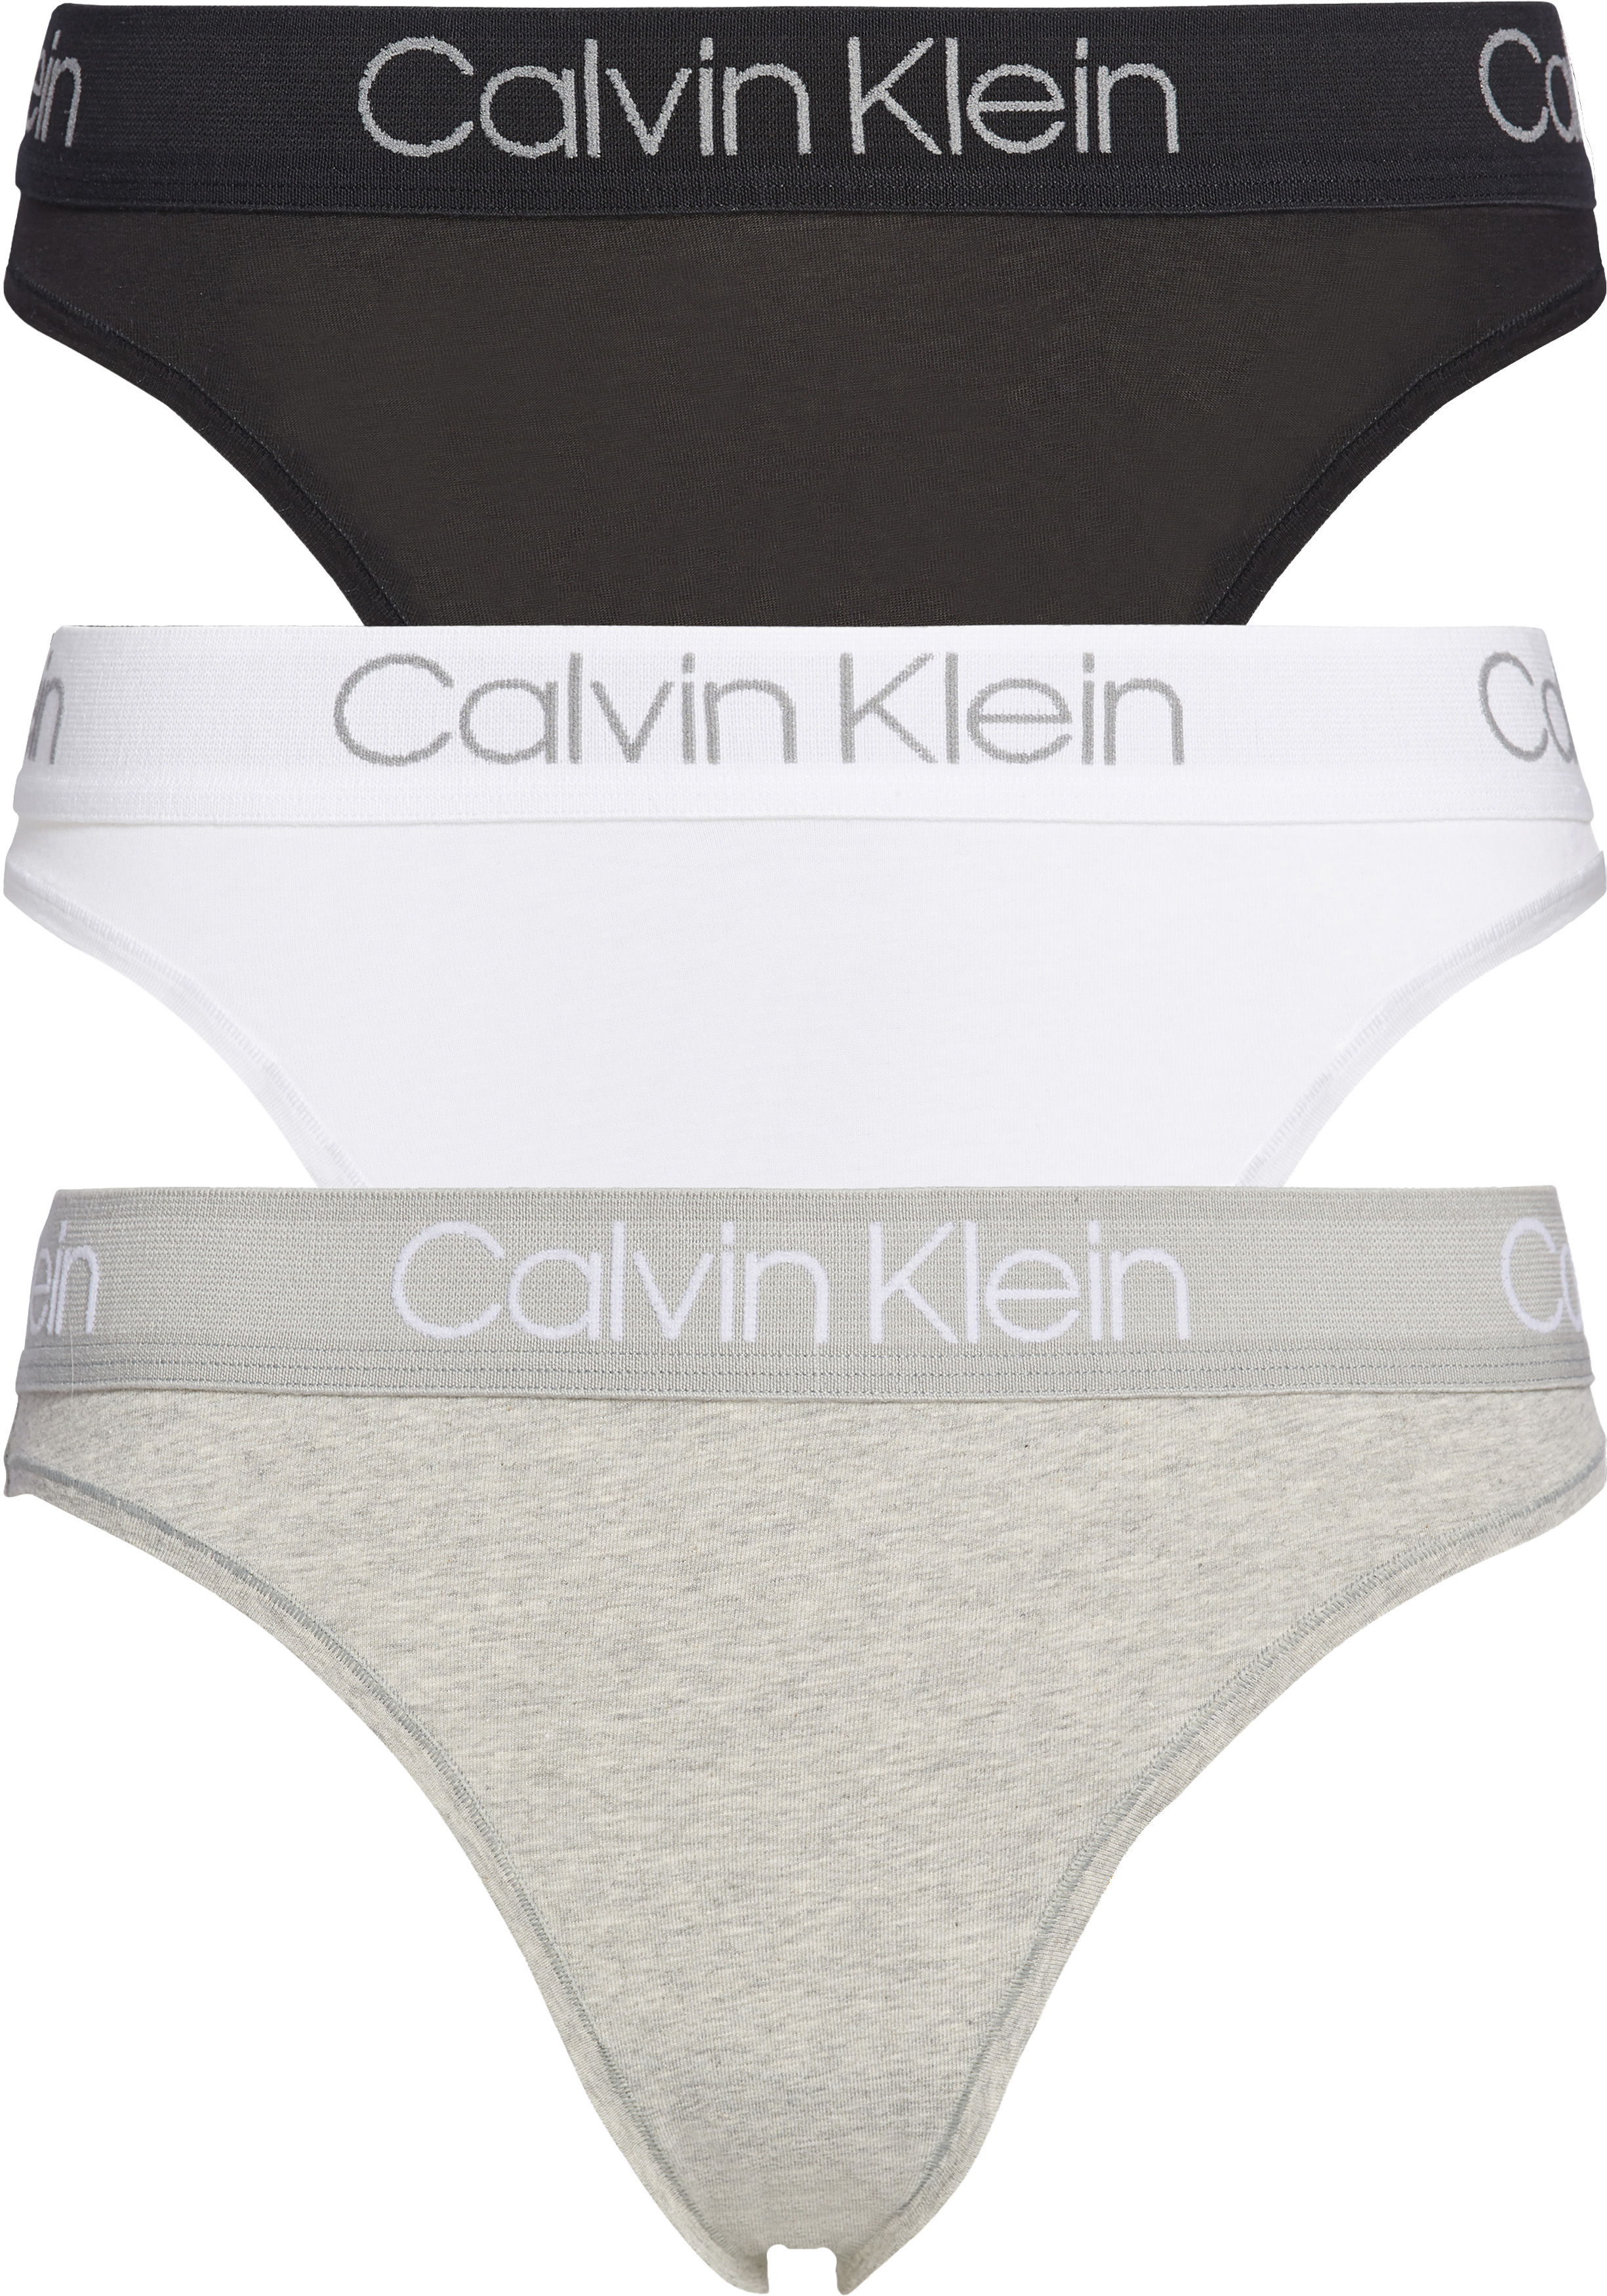 Calvin Klein dames Modern Cotton bralette top, ongevoerd, zwart